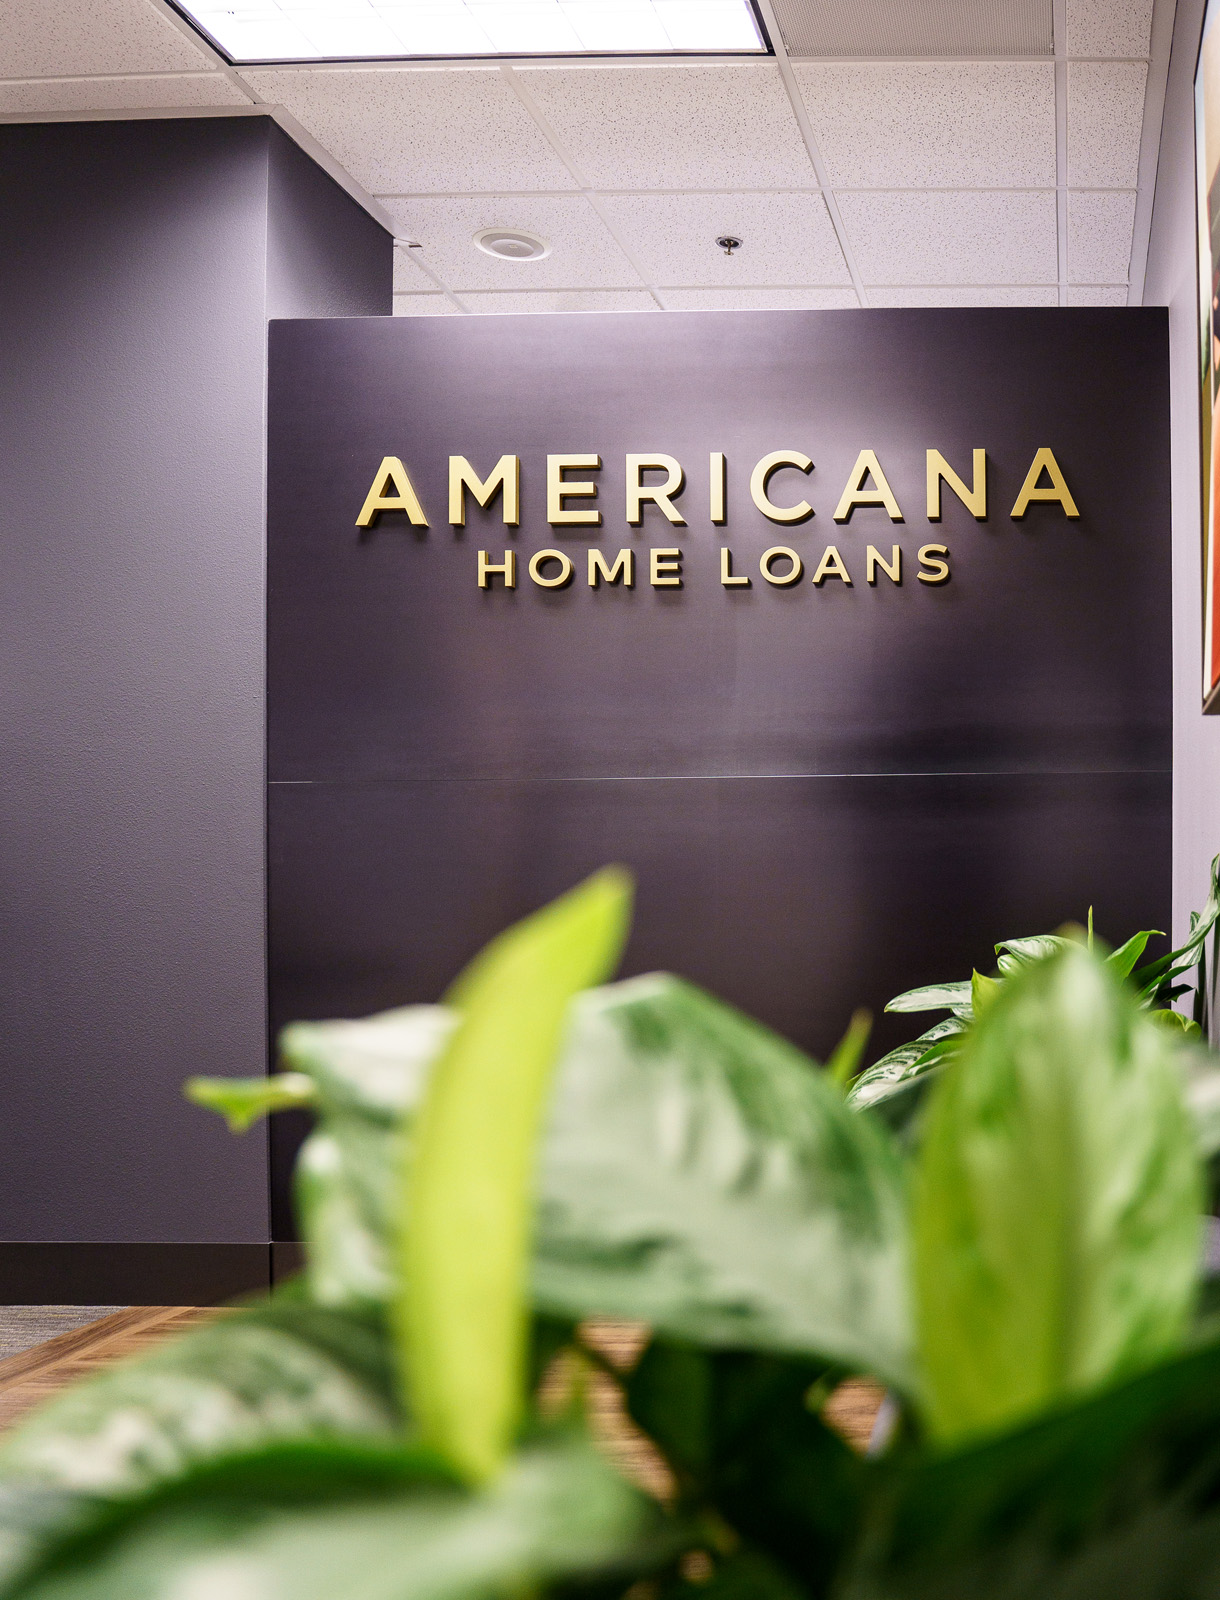 Americana Home Loans